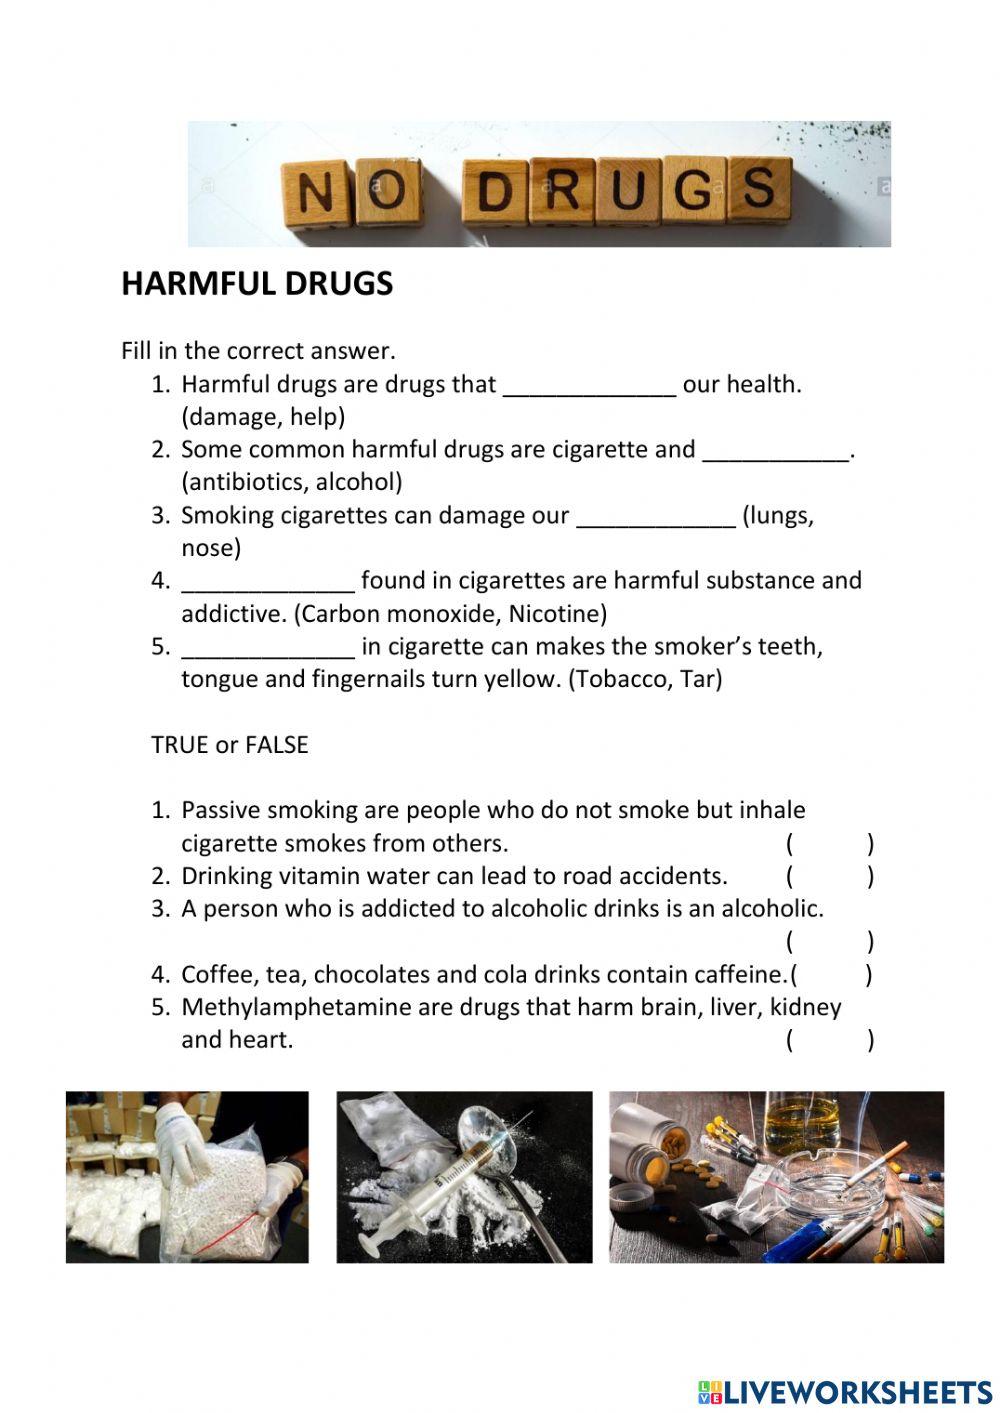 Harmful drugs